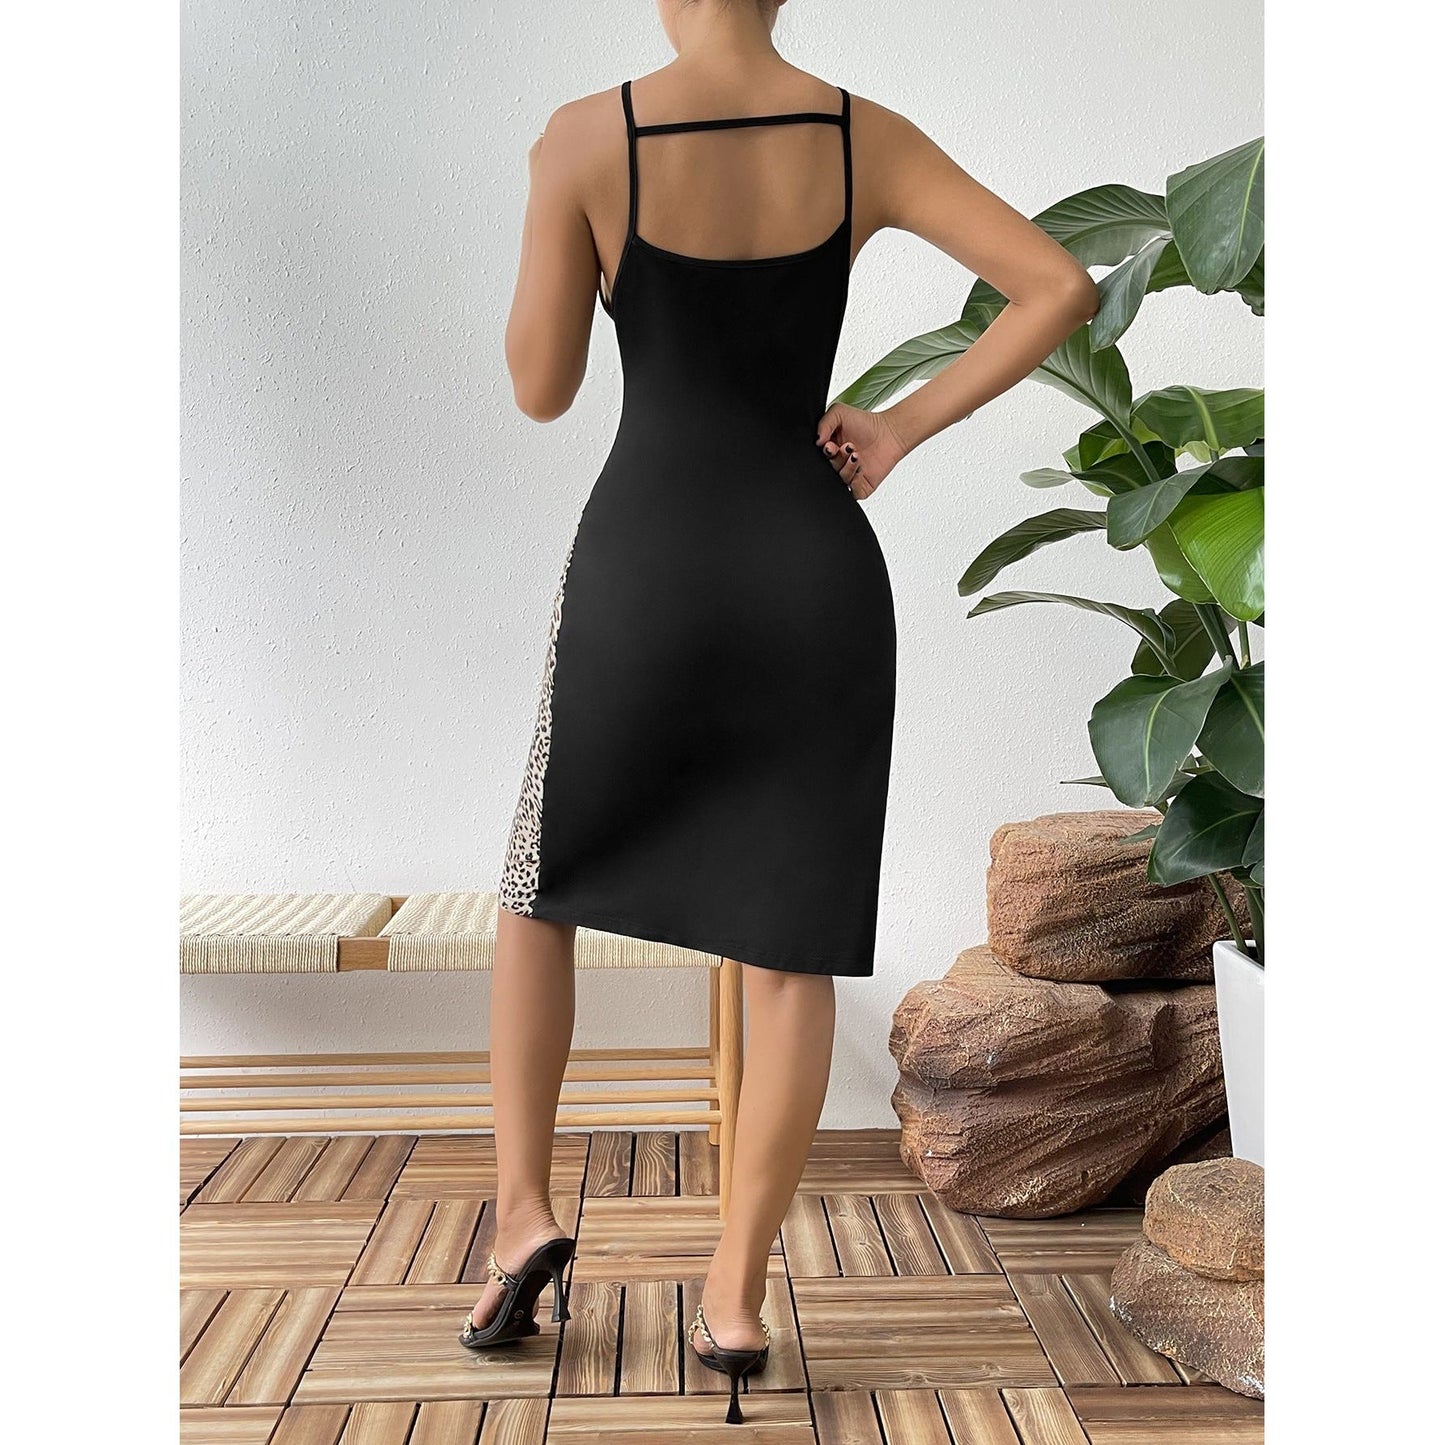 Leopard Color Block Cutout Sleeveless Knee-Length Dress - TiffanyzKlozet